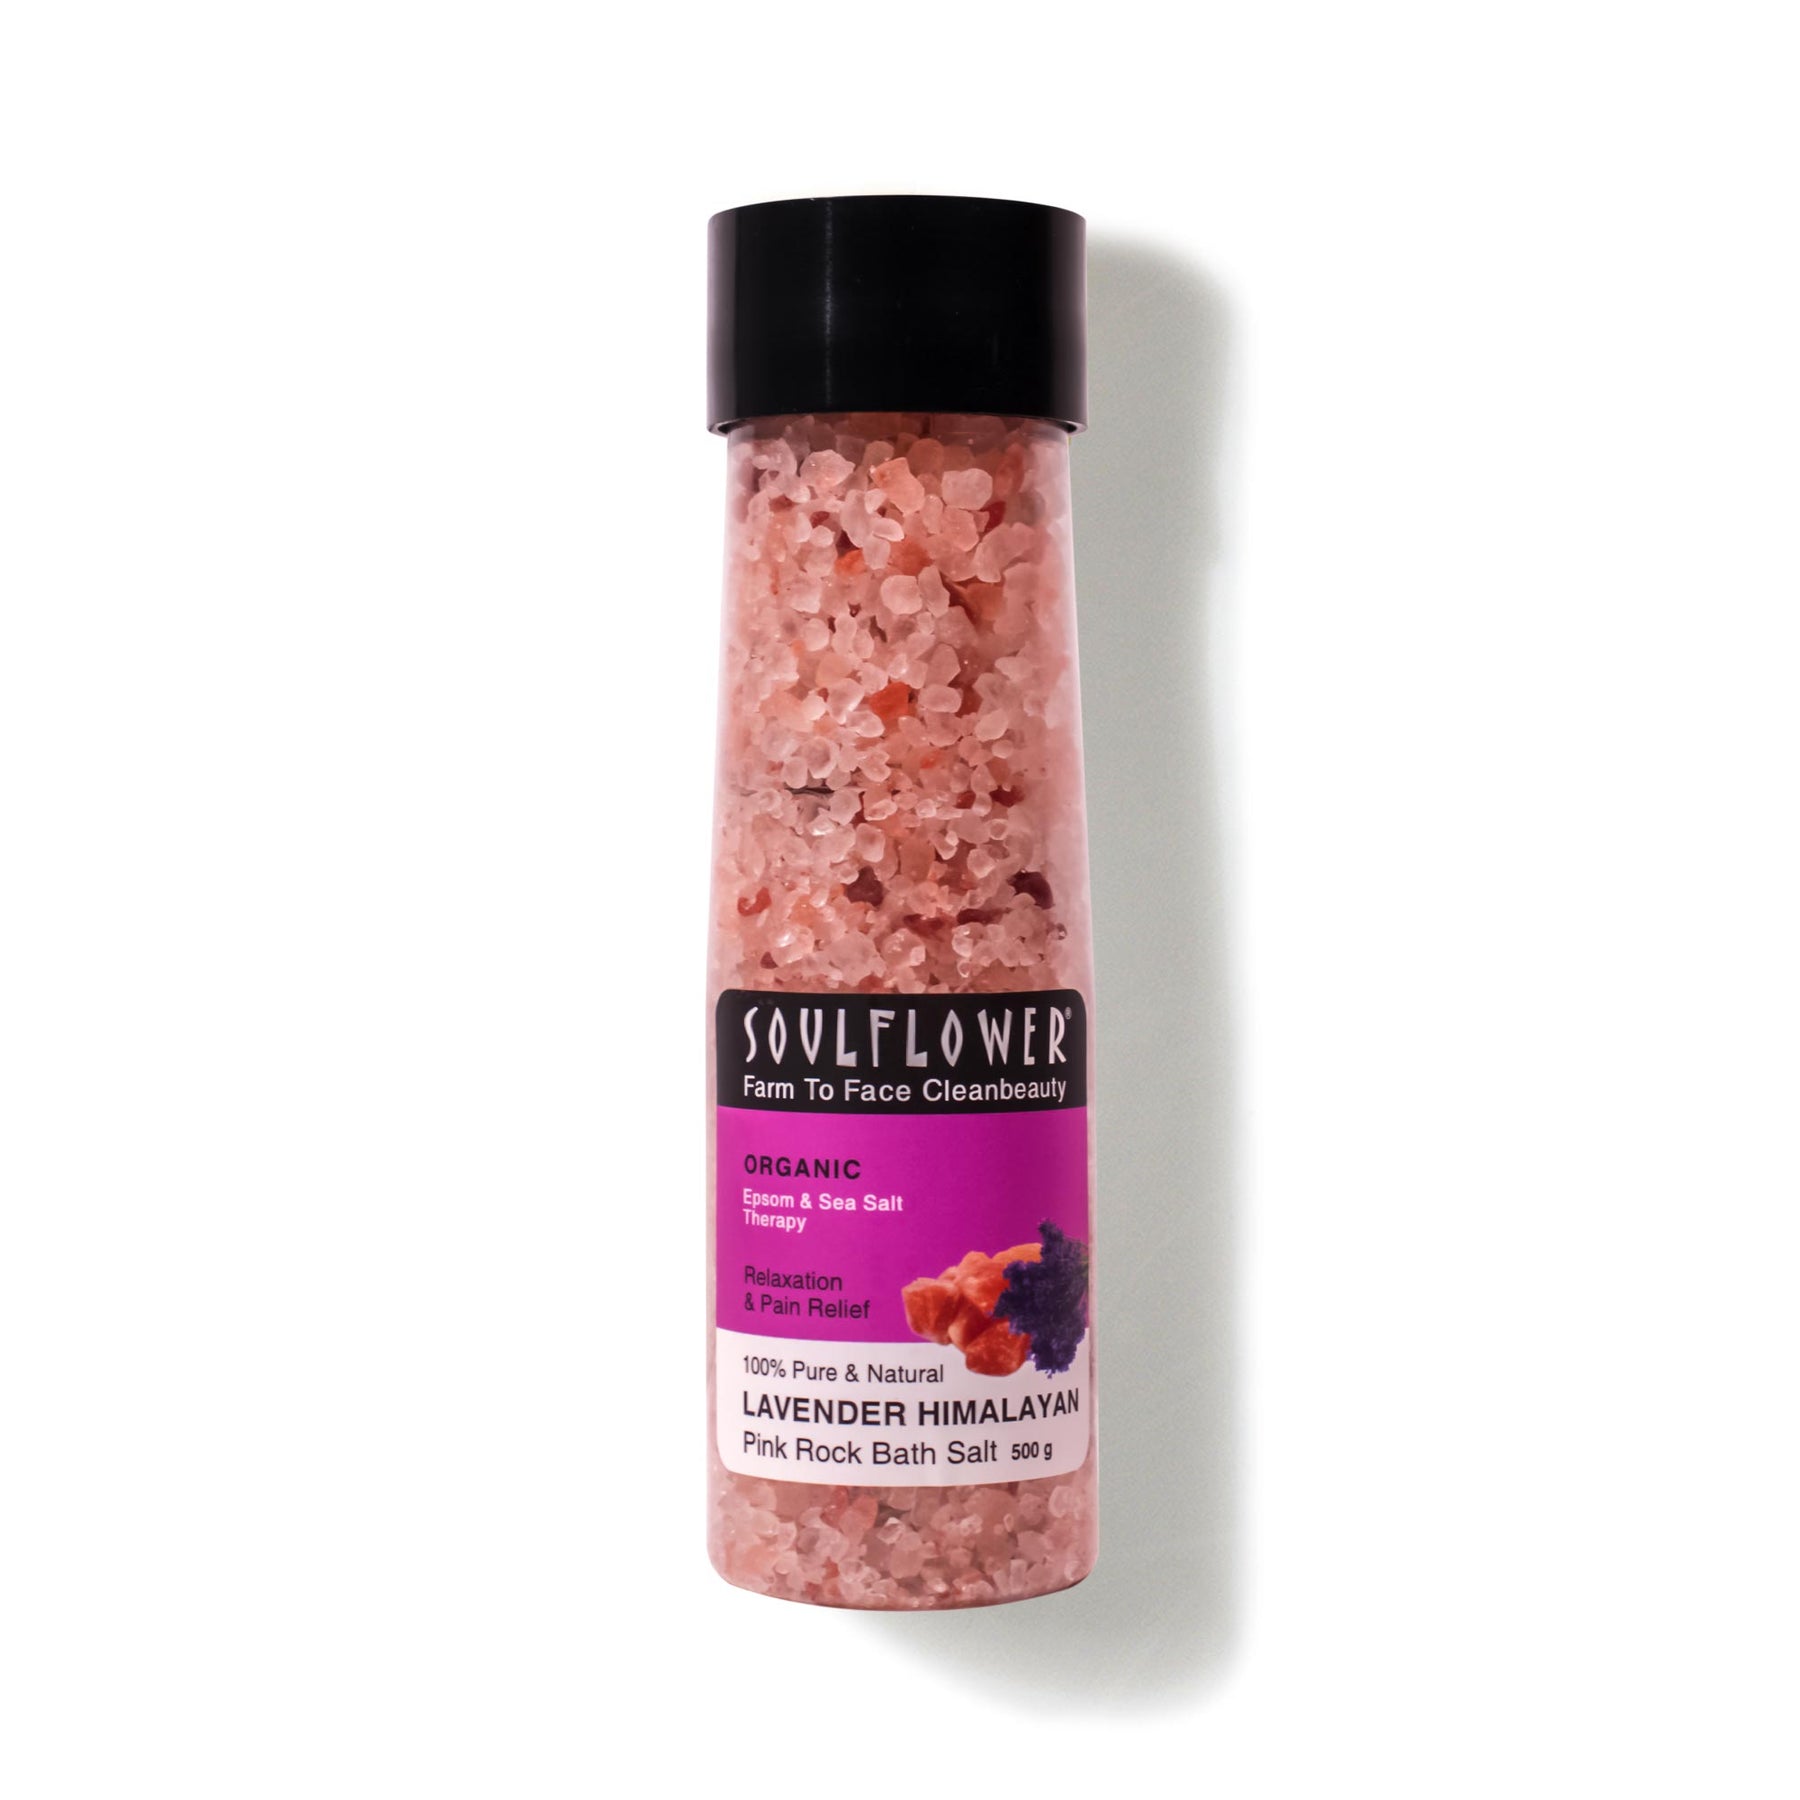 Lavender Himalayan Pink Rock Bath Salt